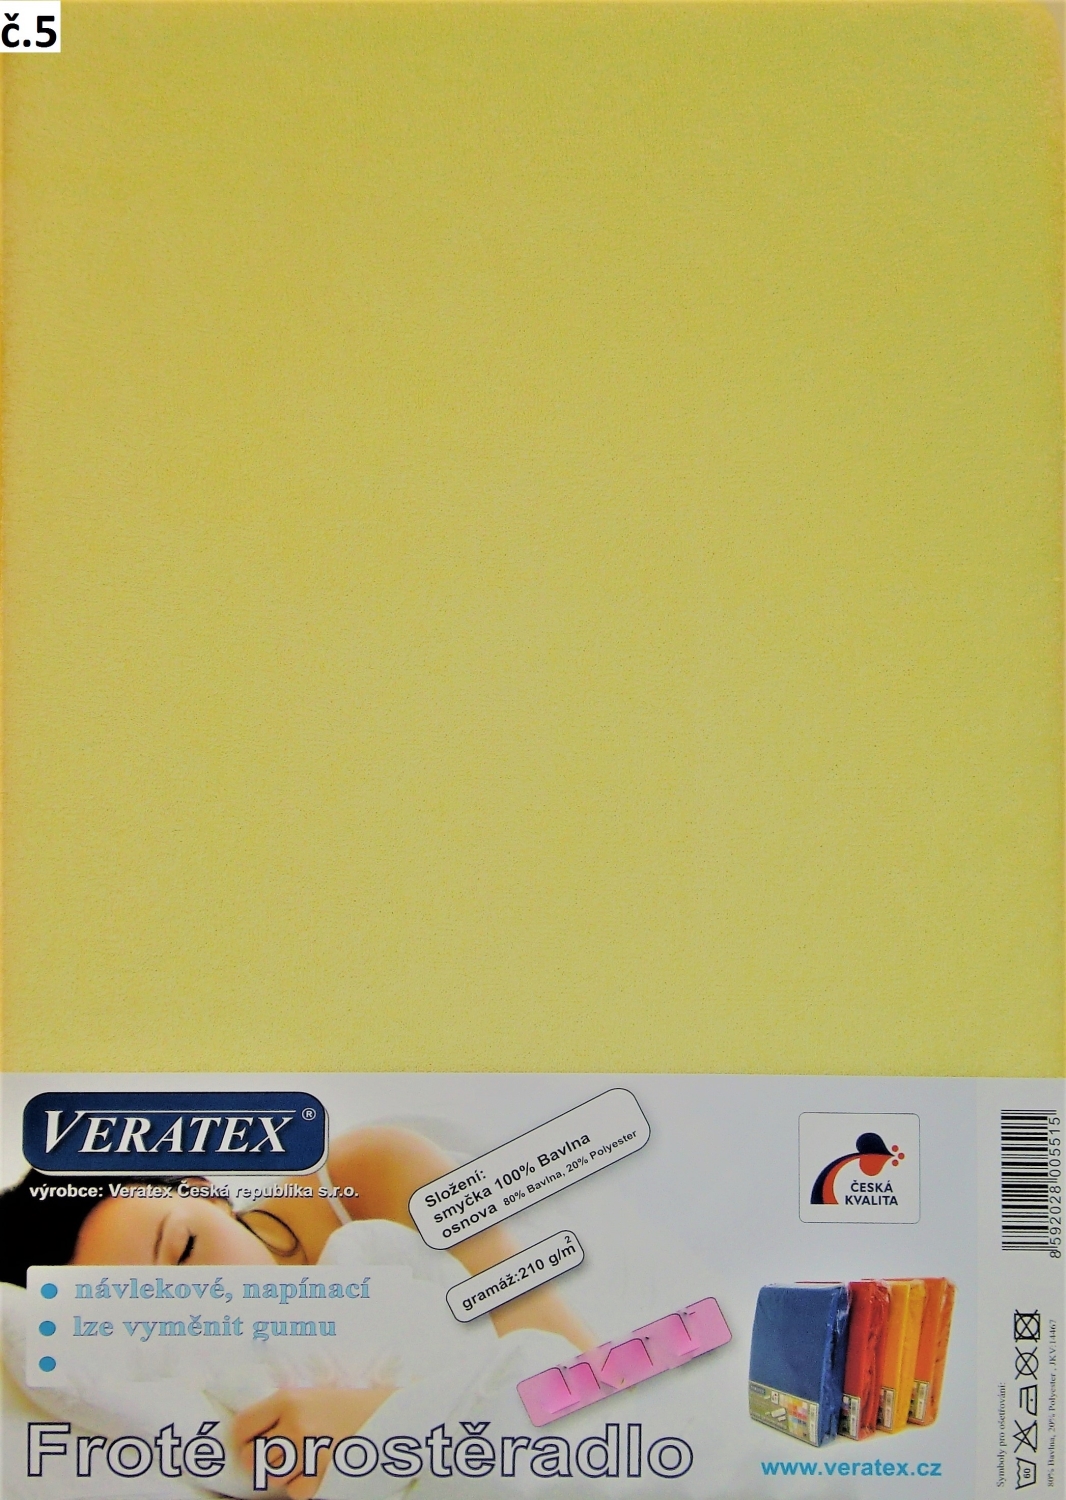 Veratex Froté prostěradlo 140x200/16 cm (č. 5-sv.žlutá) 140 x 200 cm